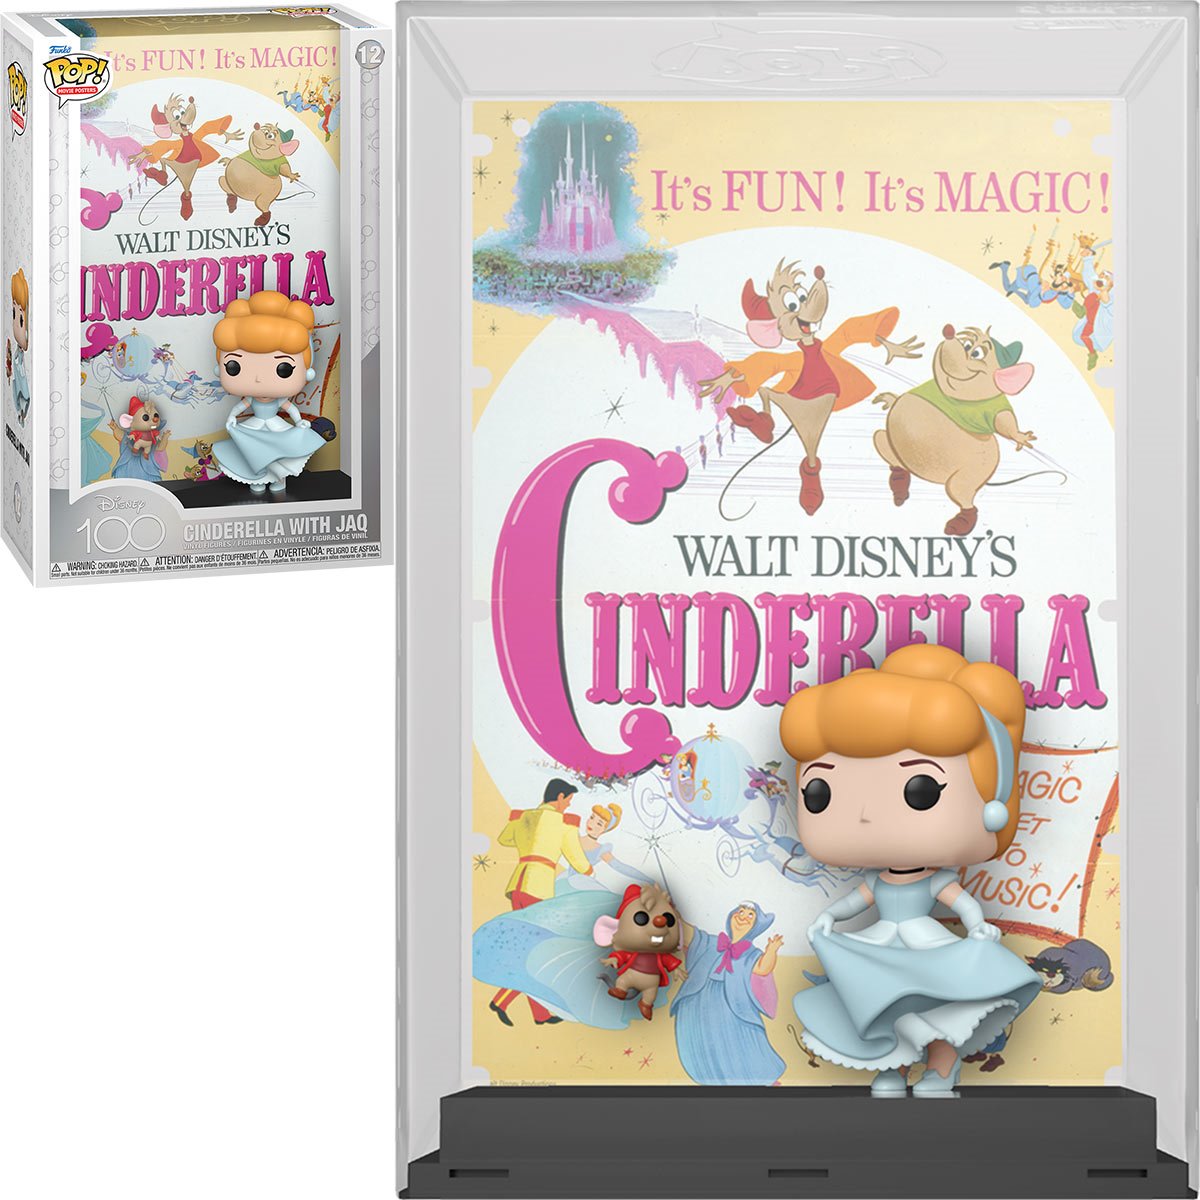 Funko Pop! Movie Poster: Disney - Cinderella